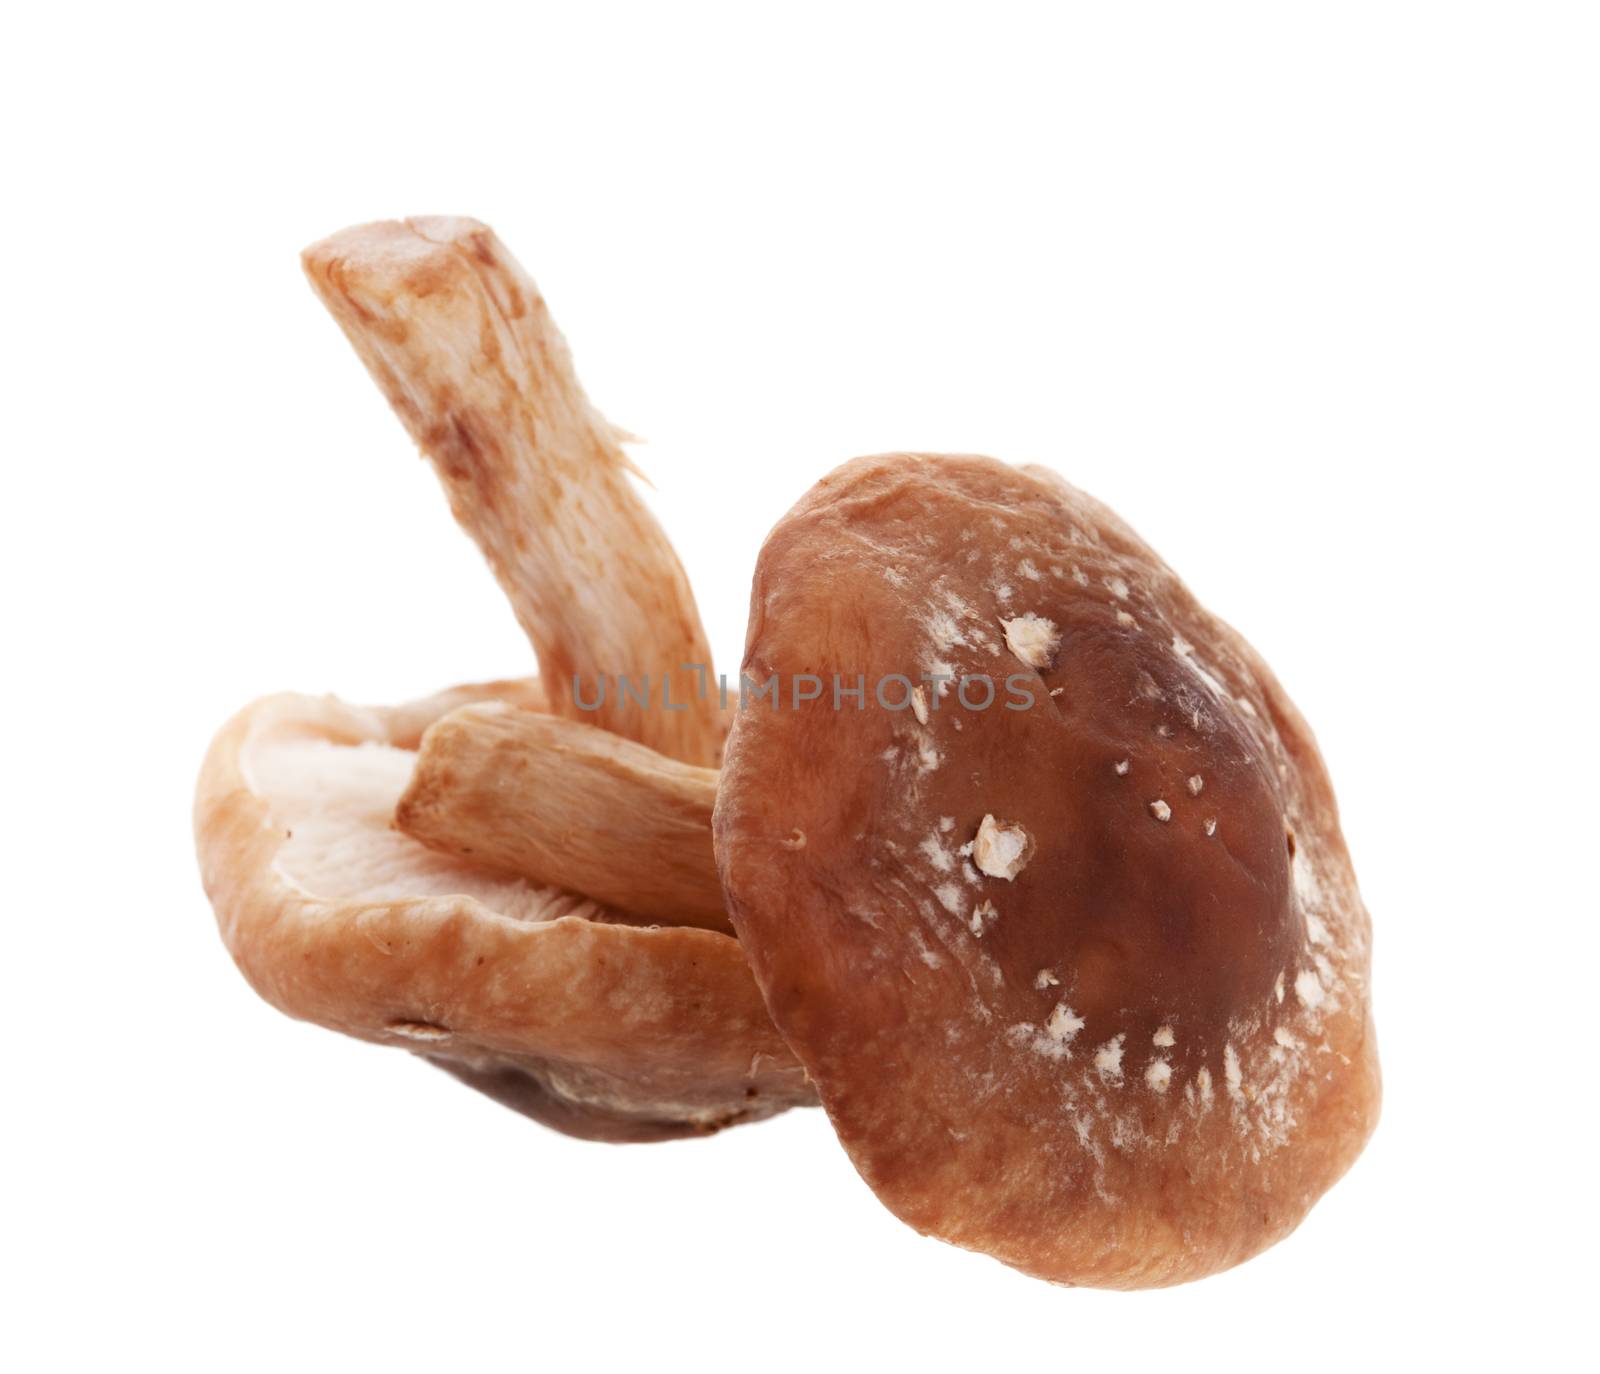 Raw, Shiitake mushrooms, shot on a white background.